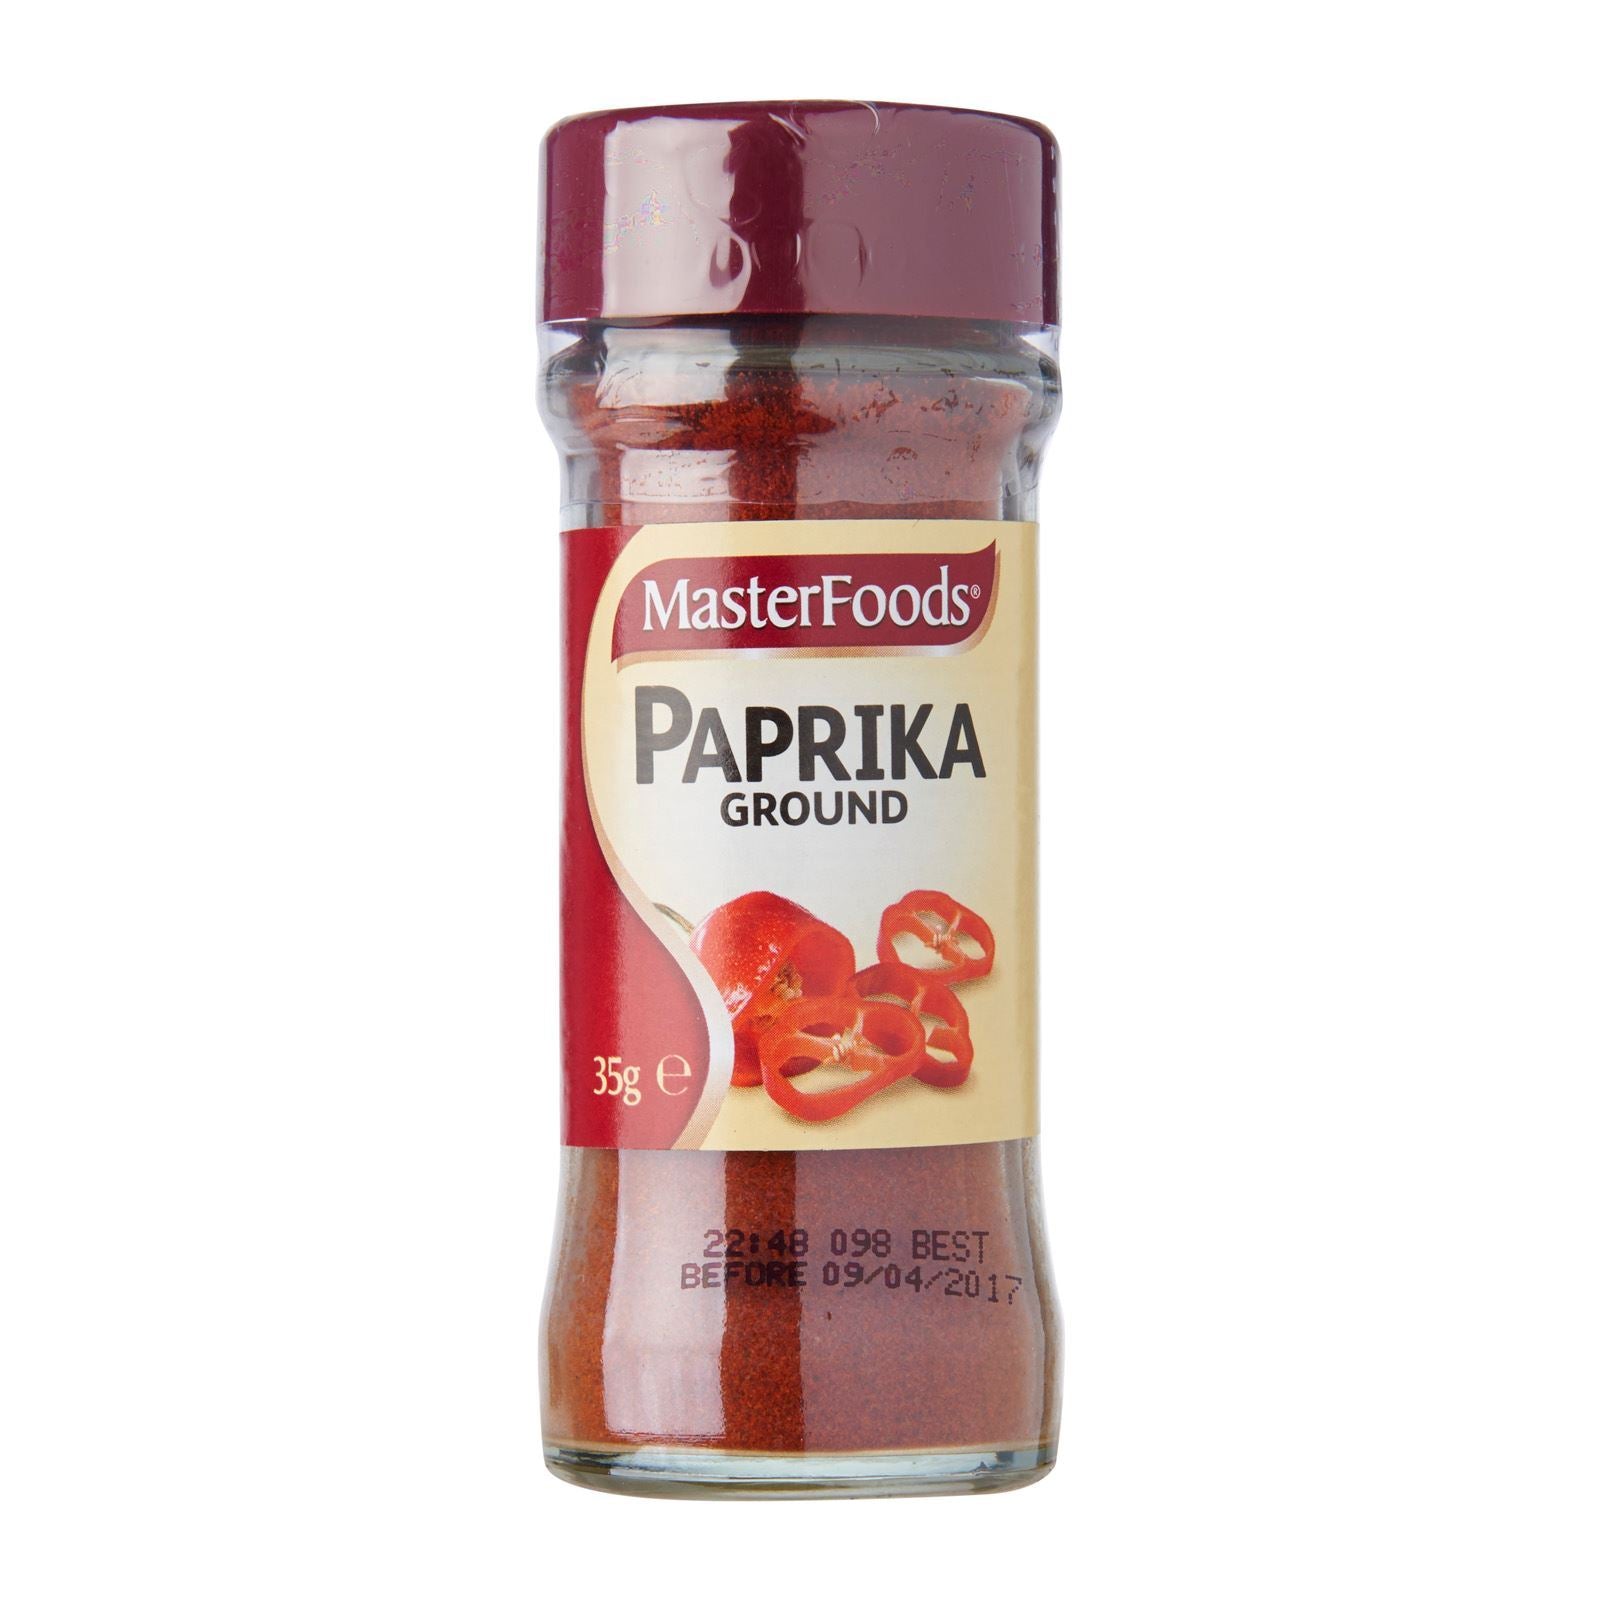 Masterfoods Paprika Ground Jar